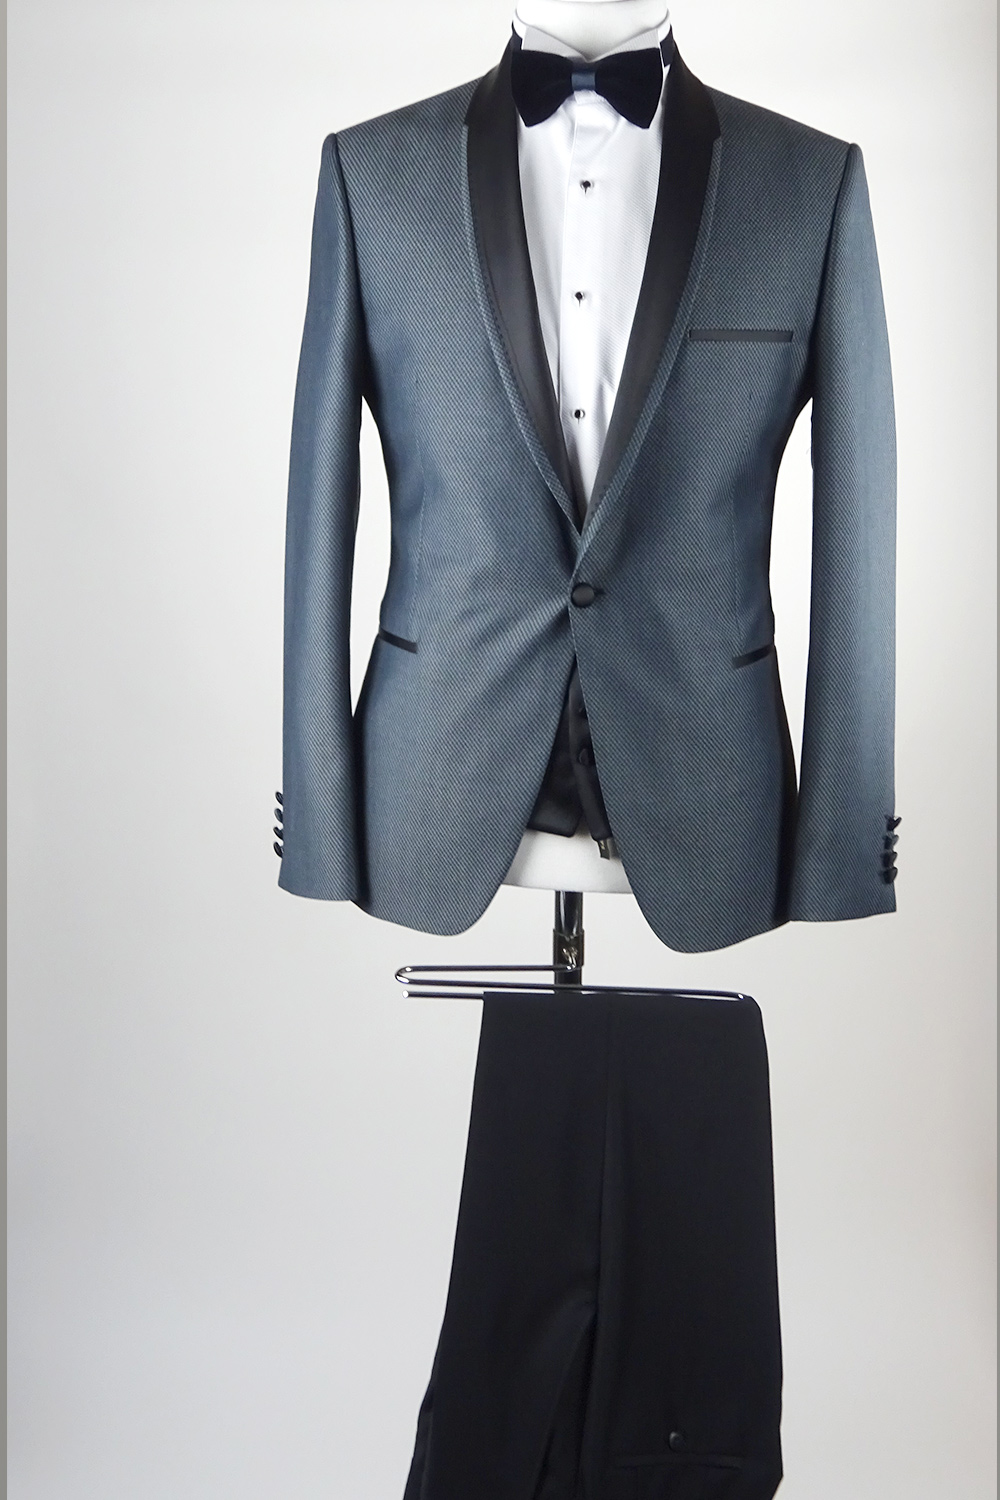 Grey Wedding Tuxedo 3 Piece - Tom Murphy's Formal and Menswear